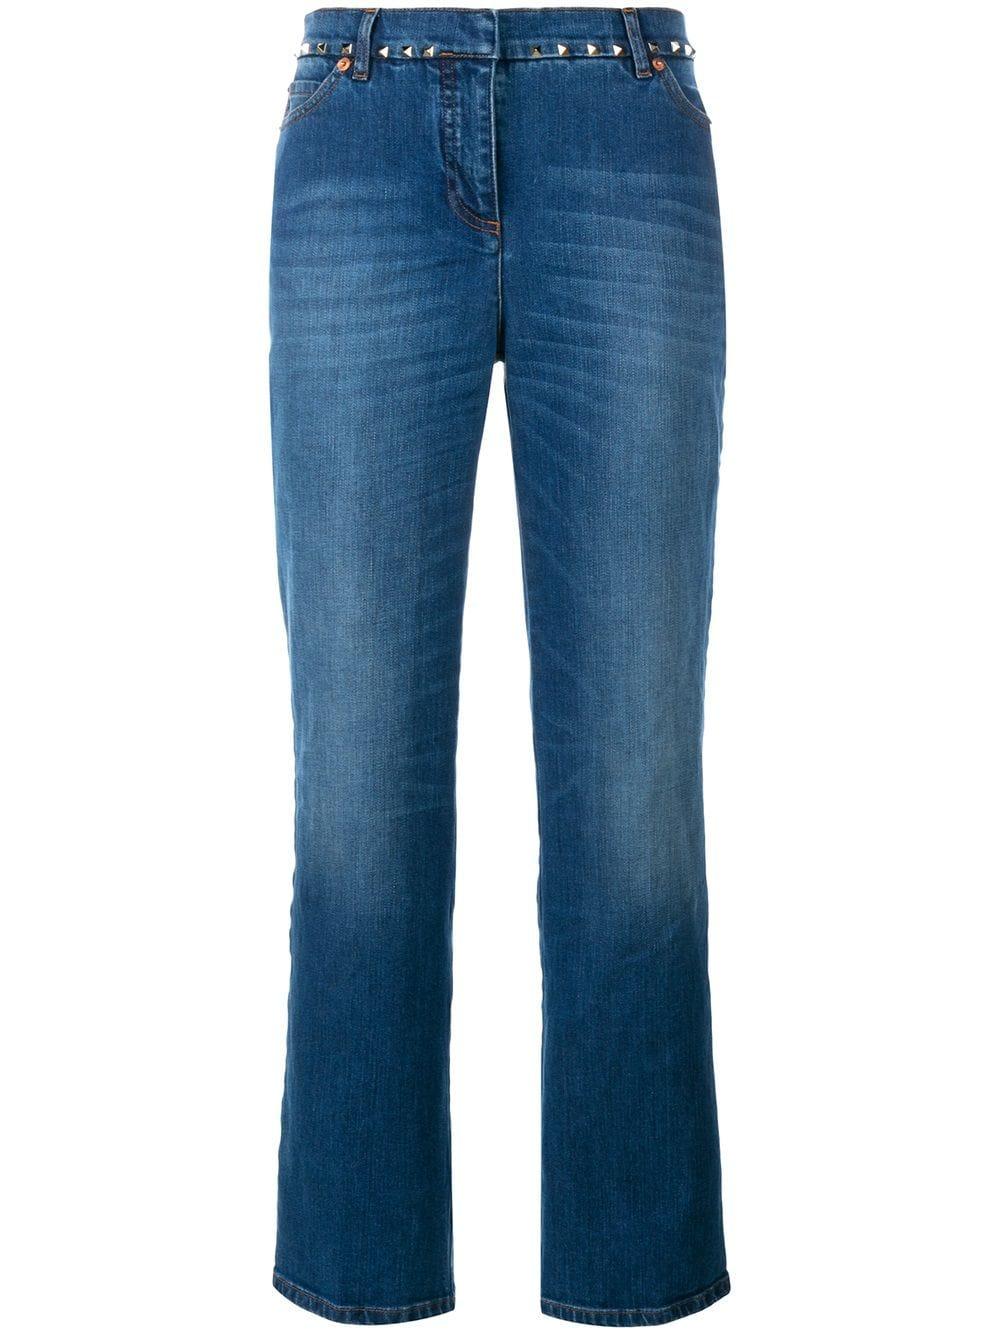 Valentino Denim Rockstud Flared Leg Jeans in Blue - Lyst